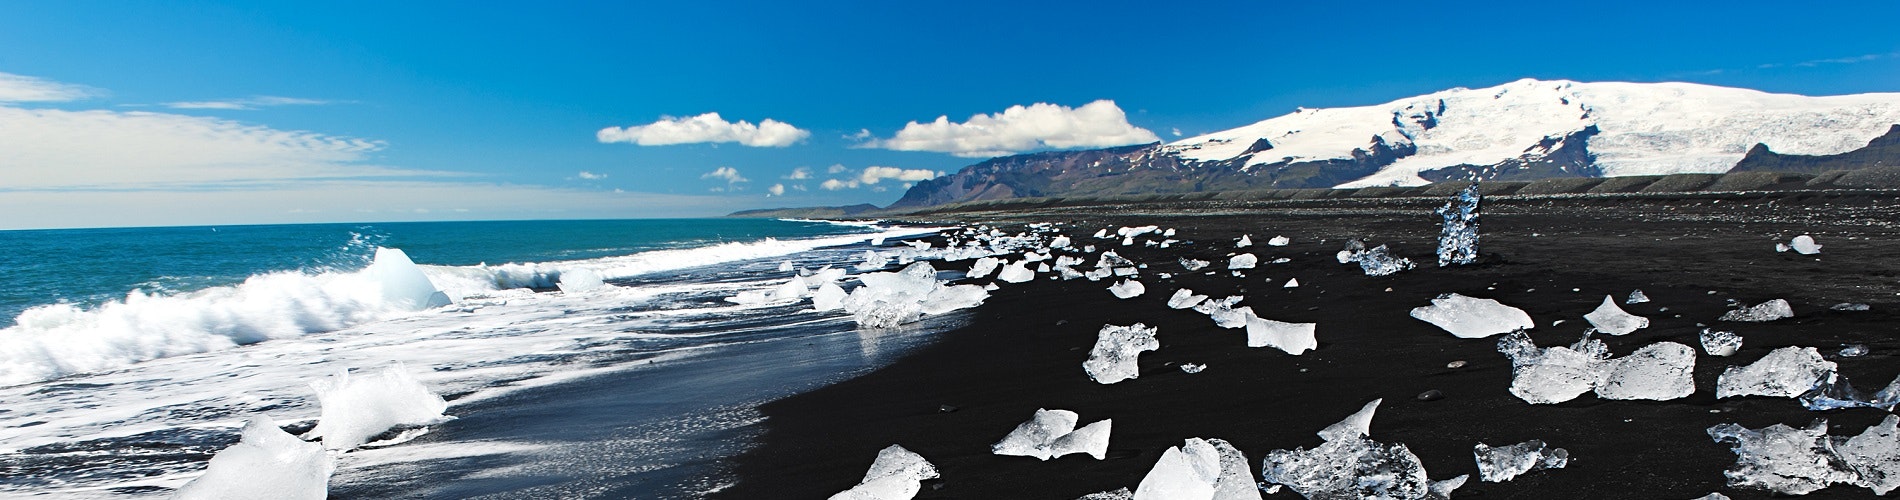 Diamond Beach full of icebergs in Iceland